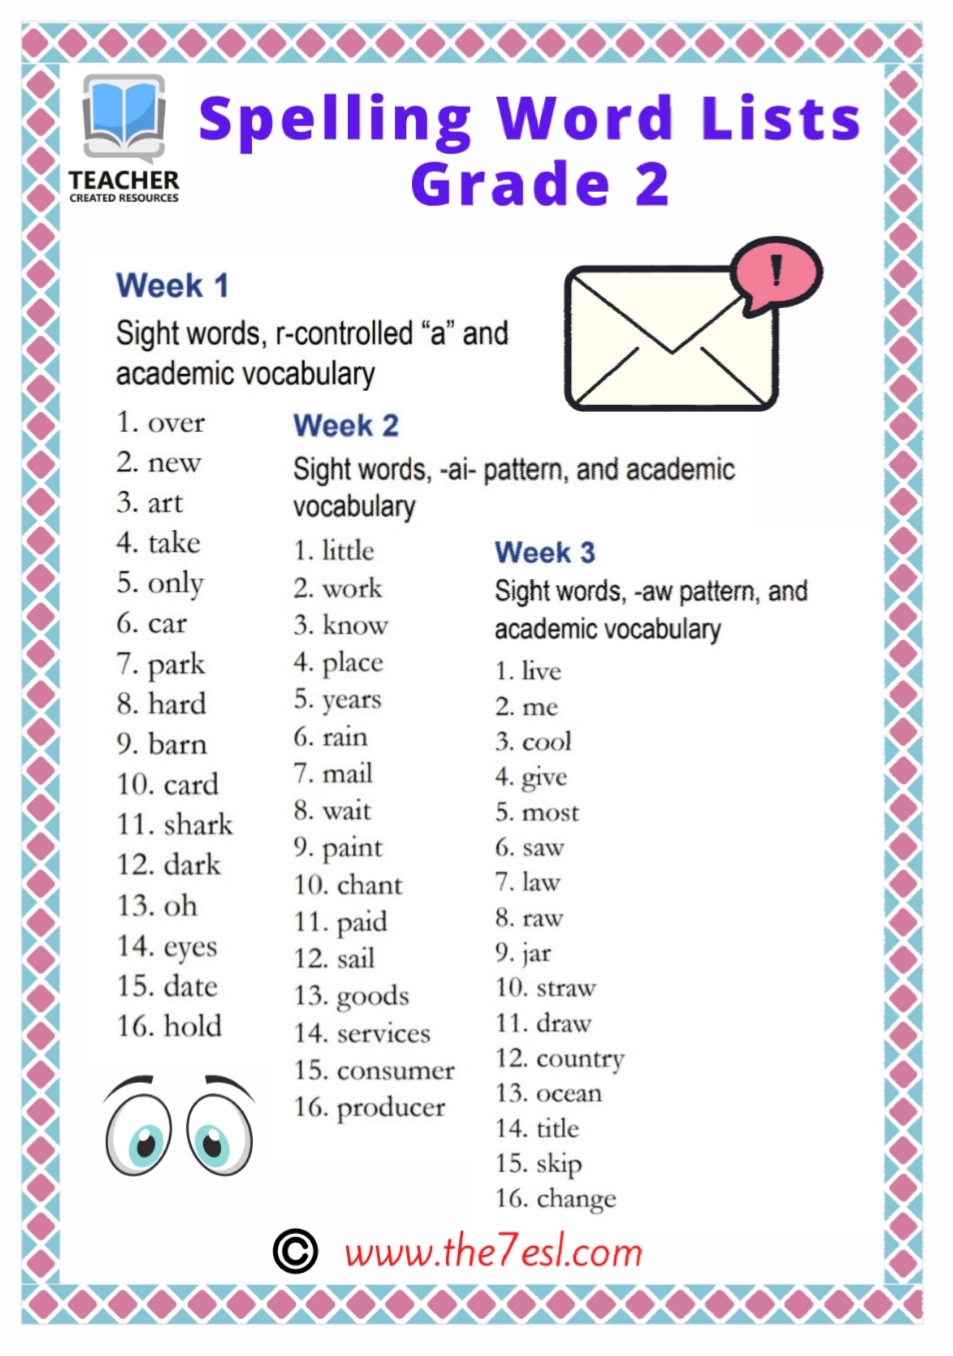 spelling-word-lists-grade-2